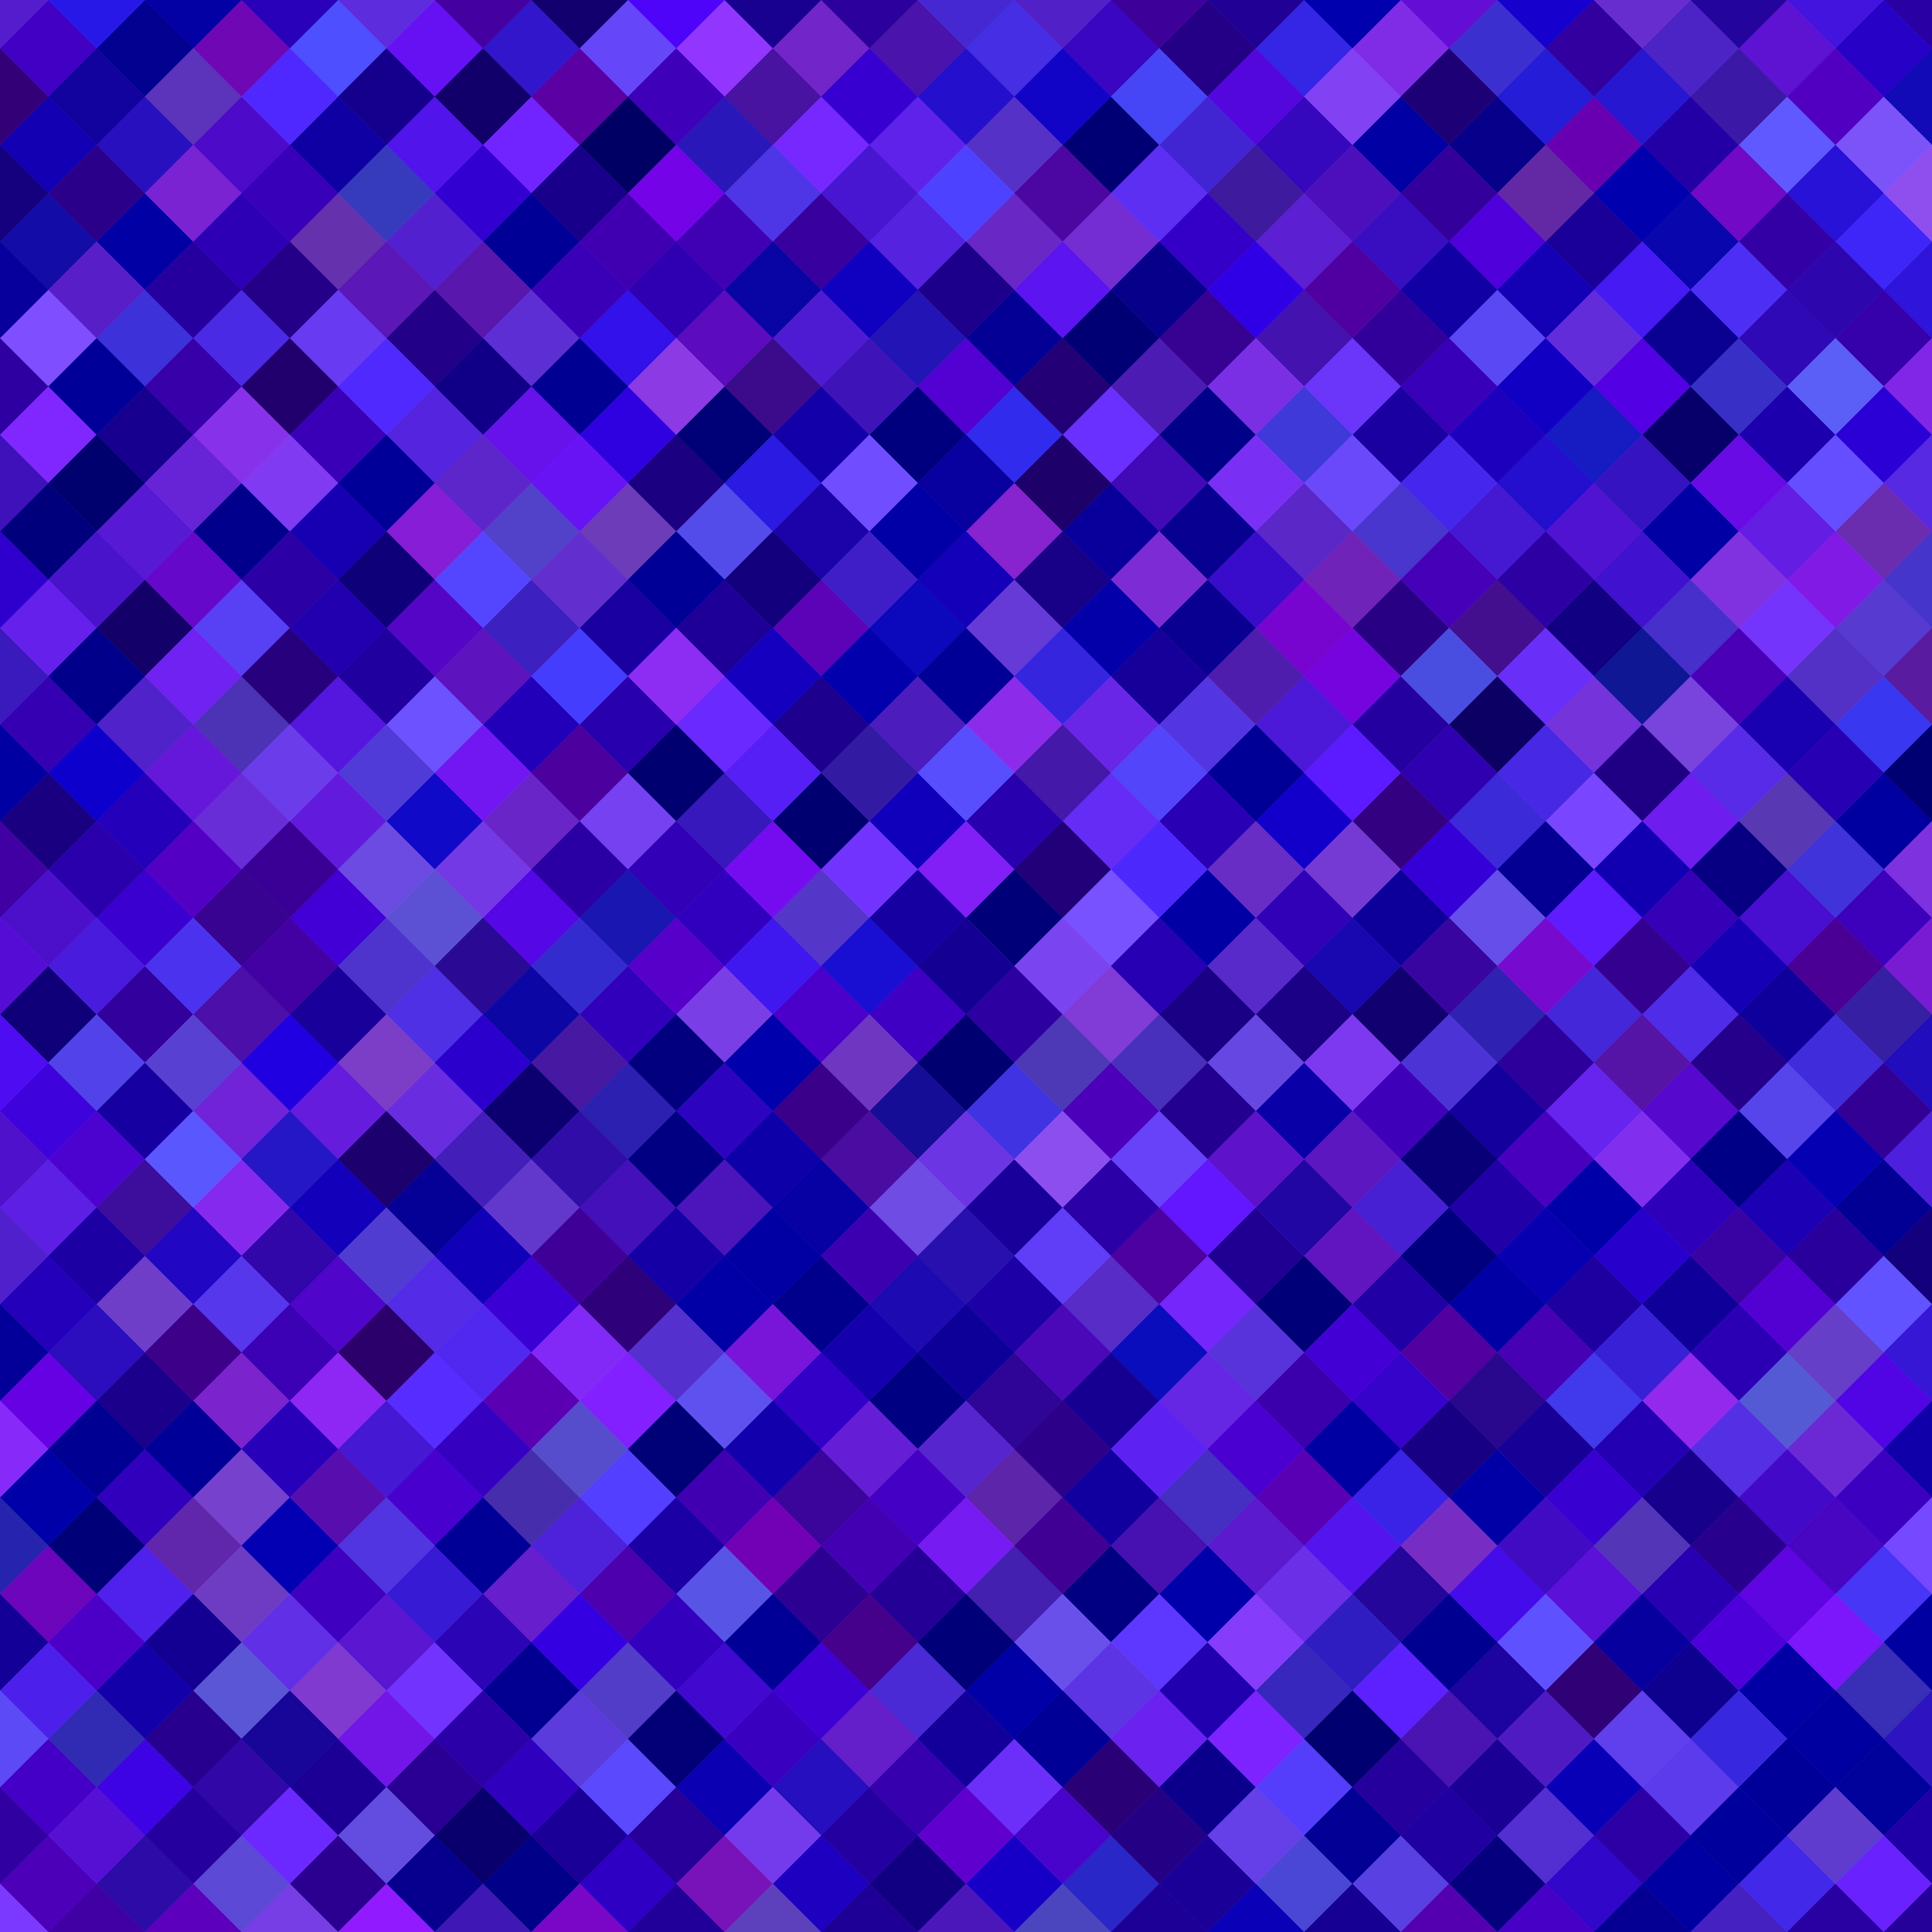 113328 descargar imagen violeta, azul, textura, líneas, lineas, texturas, púrpura, cuadrícula, cuadrados, diagonal: fondos de pantalla y protectores de pantalla gratis